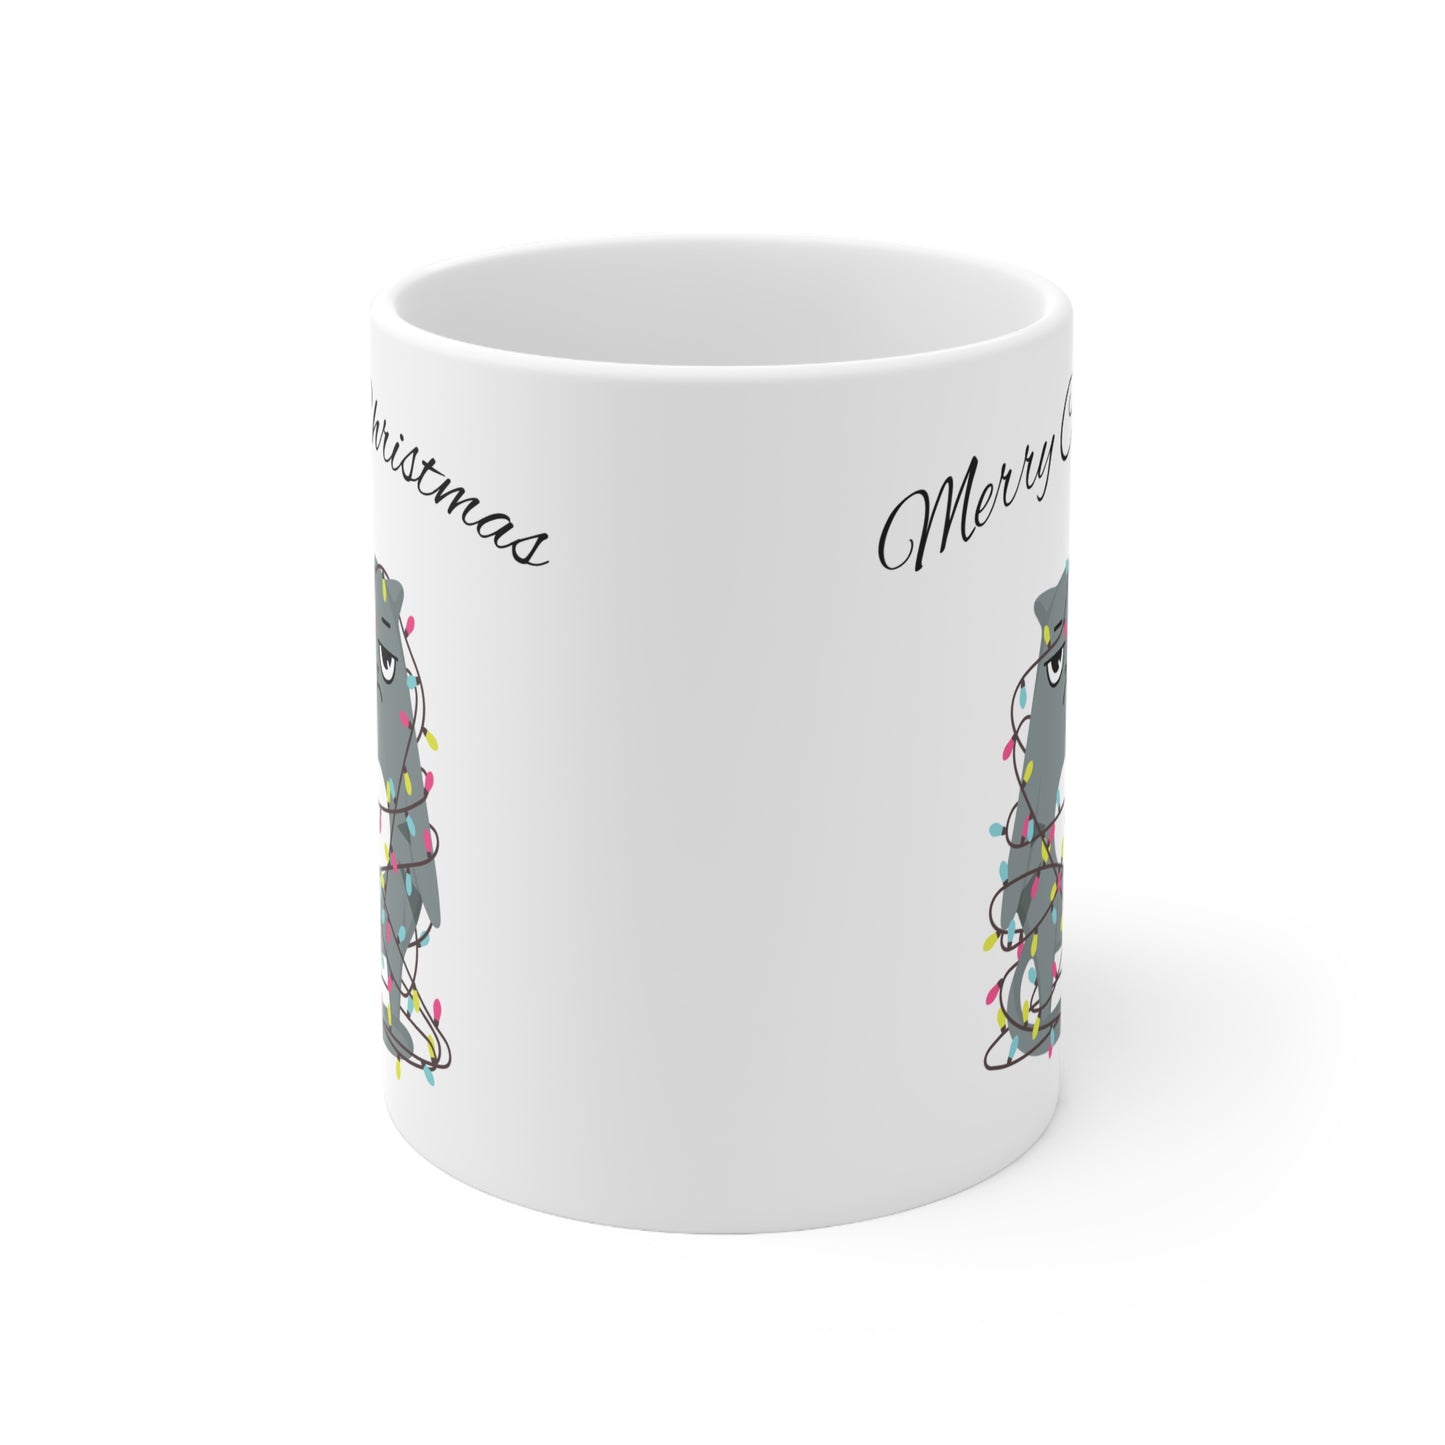 Christmas Joy: Festive 11 oz Ceramic Mug for Your Holiday Delights